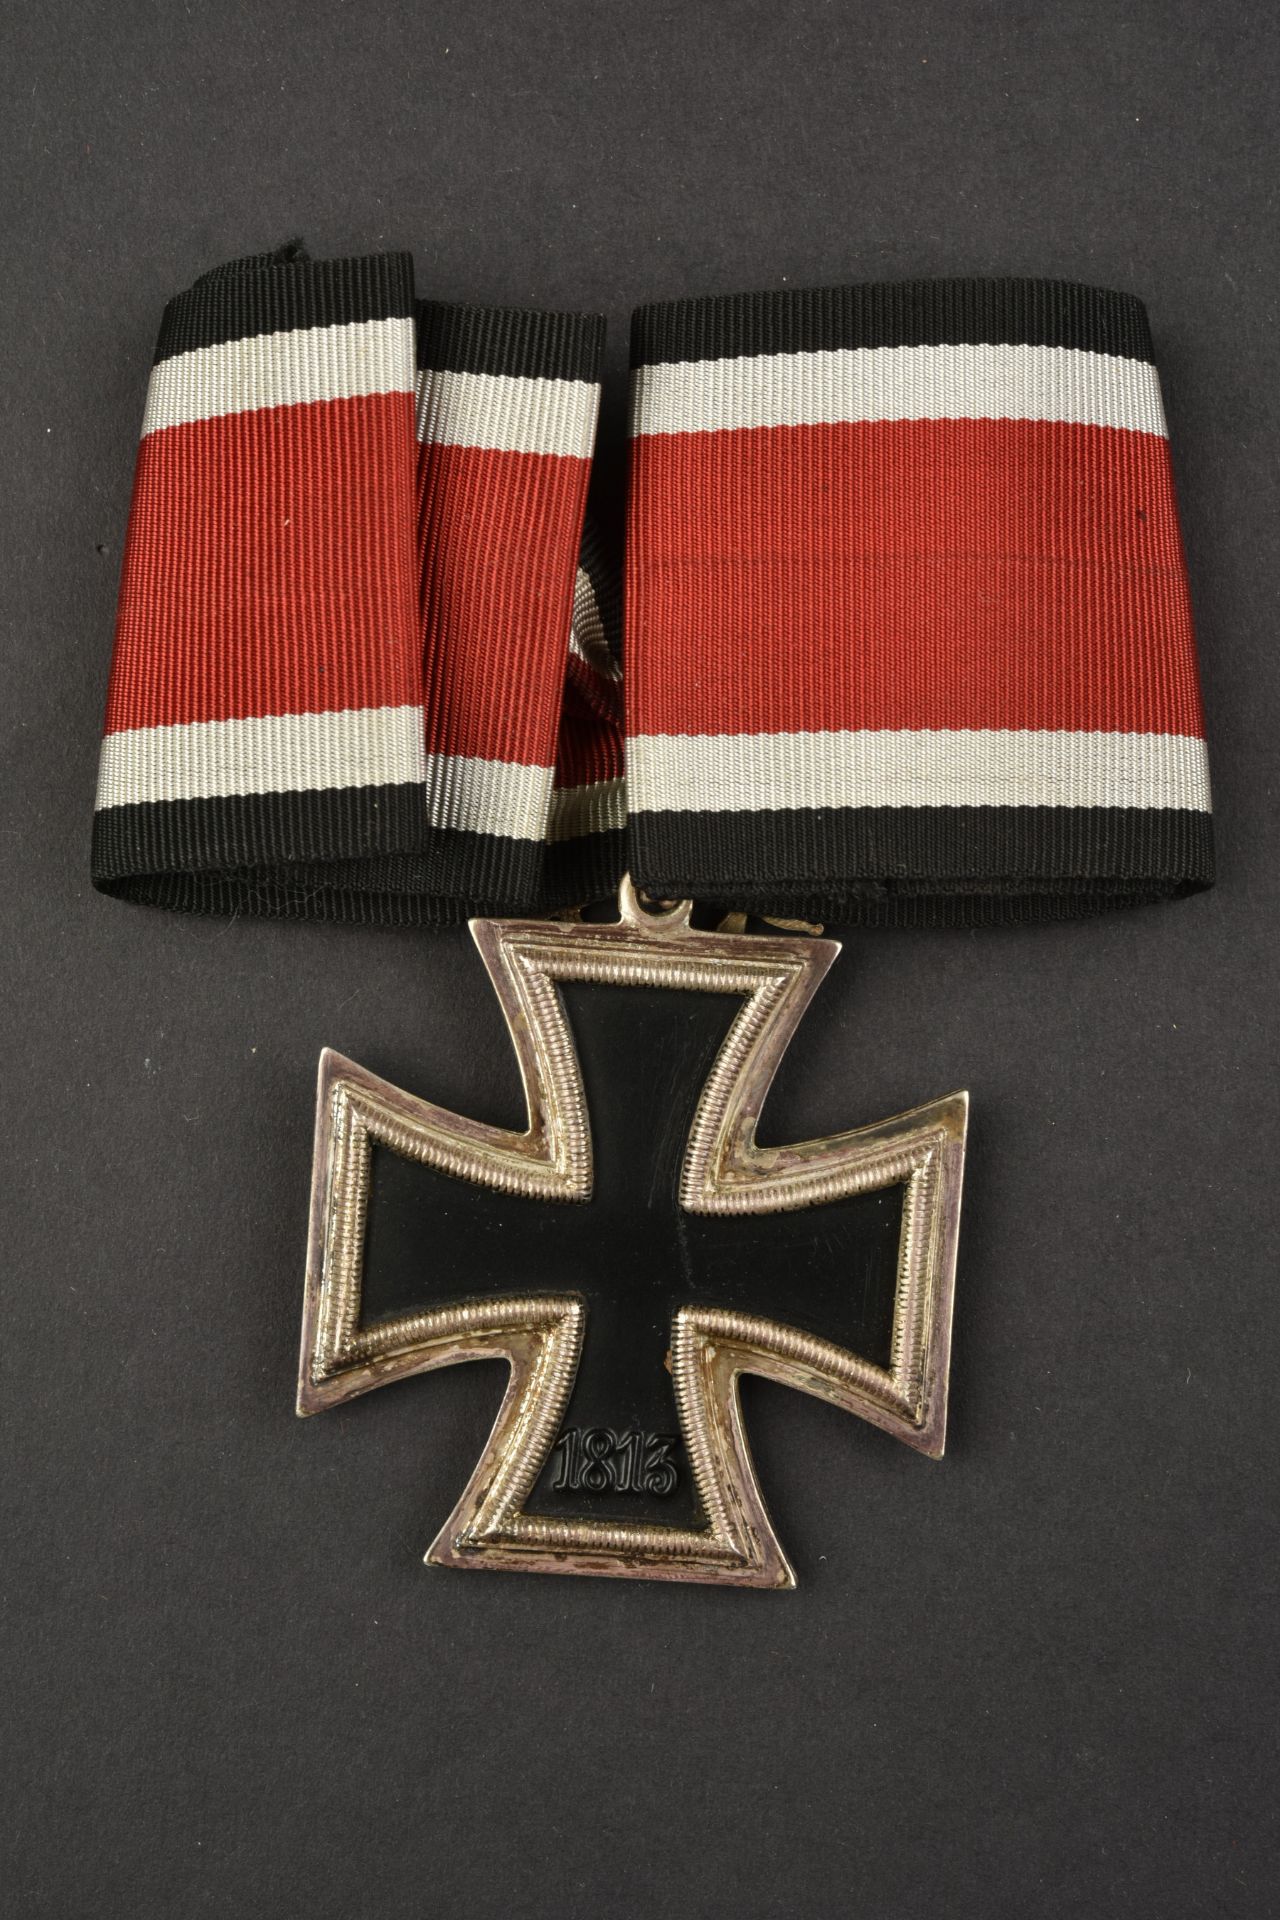 Reproduction de Croix de Chevalier. Reproduction of a Knight s Cross. - Image 10 of 17